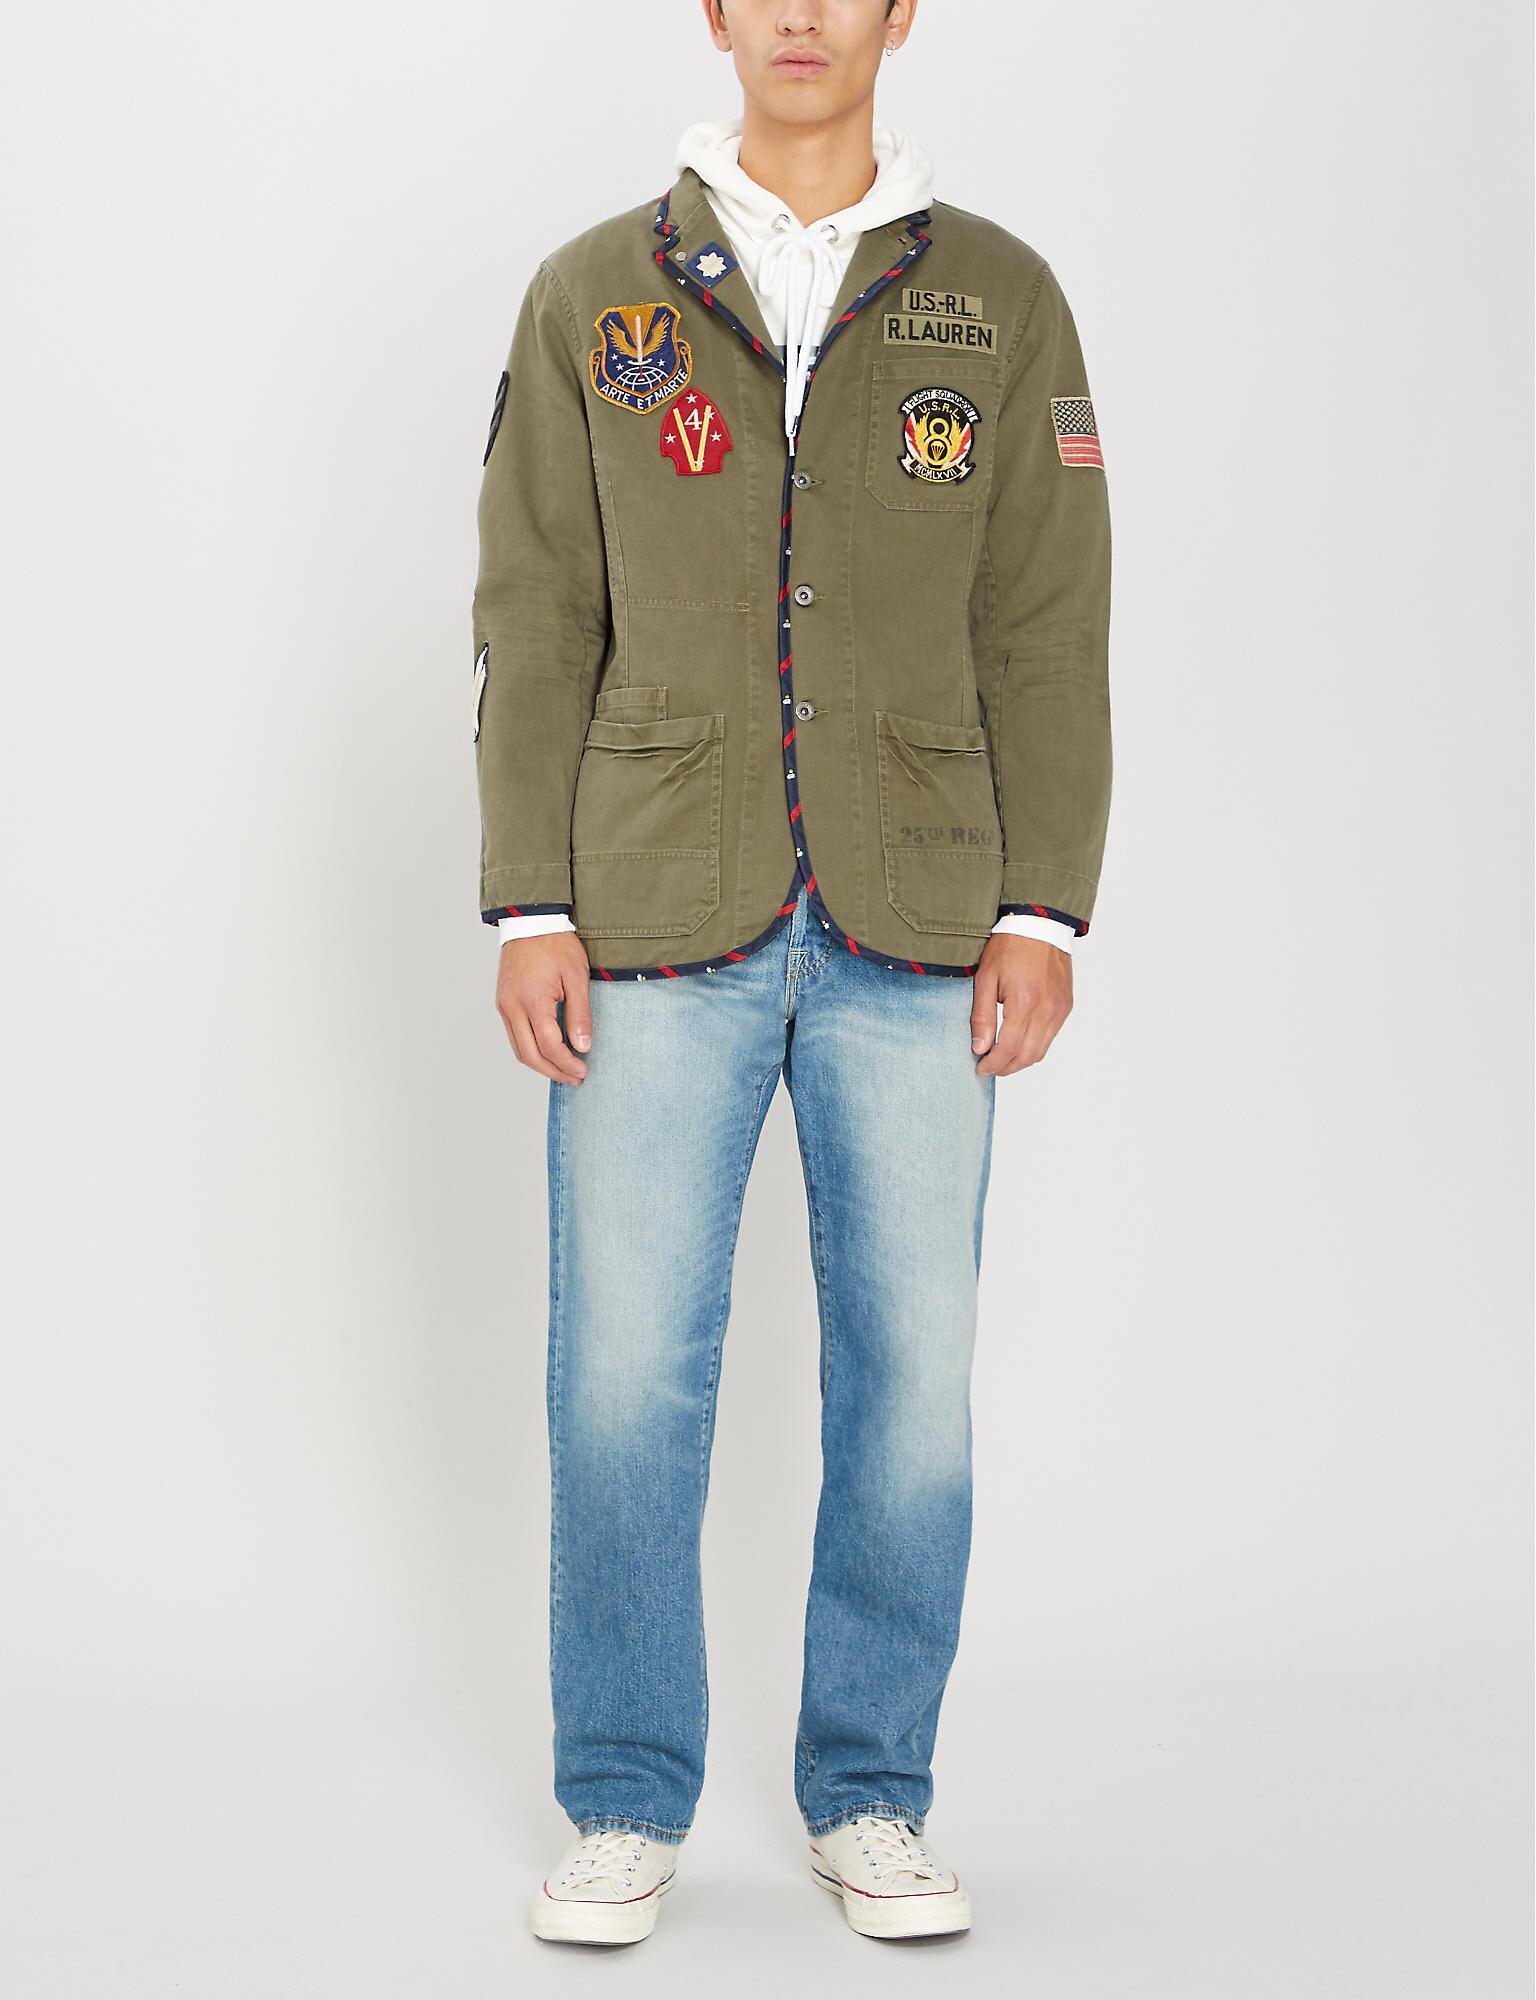 Lyst - Polo Ralph Lauren Cotton Blend Safari Jacket in 